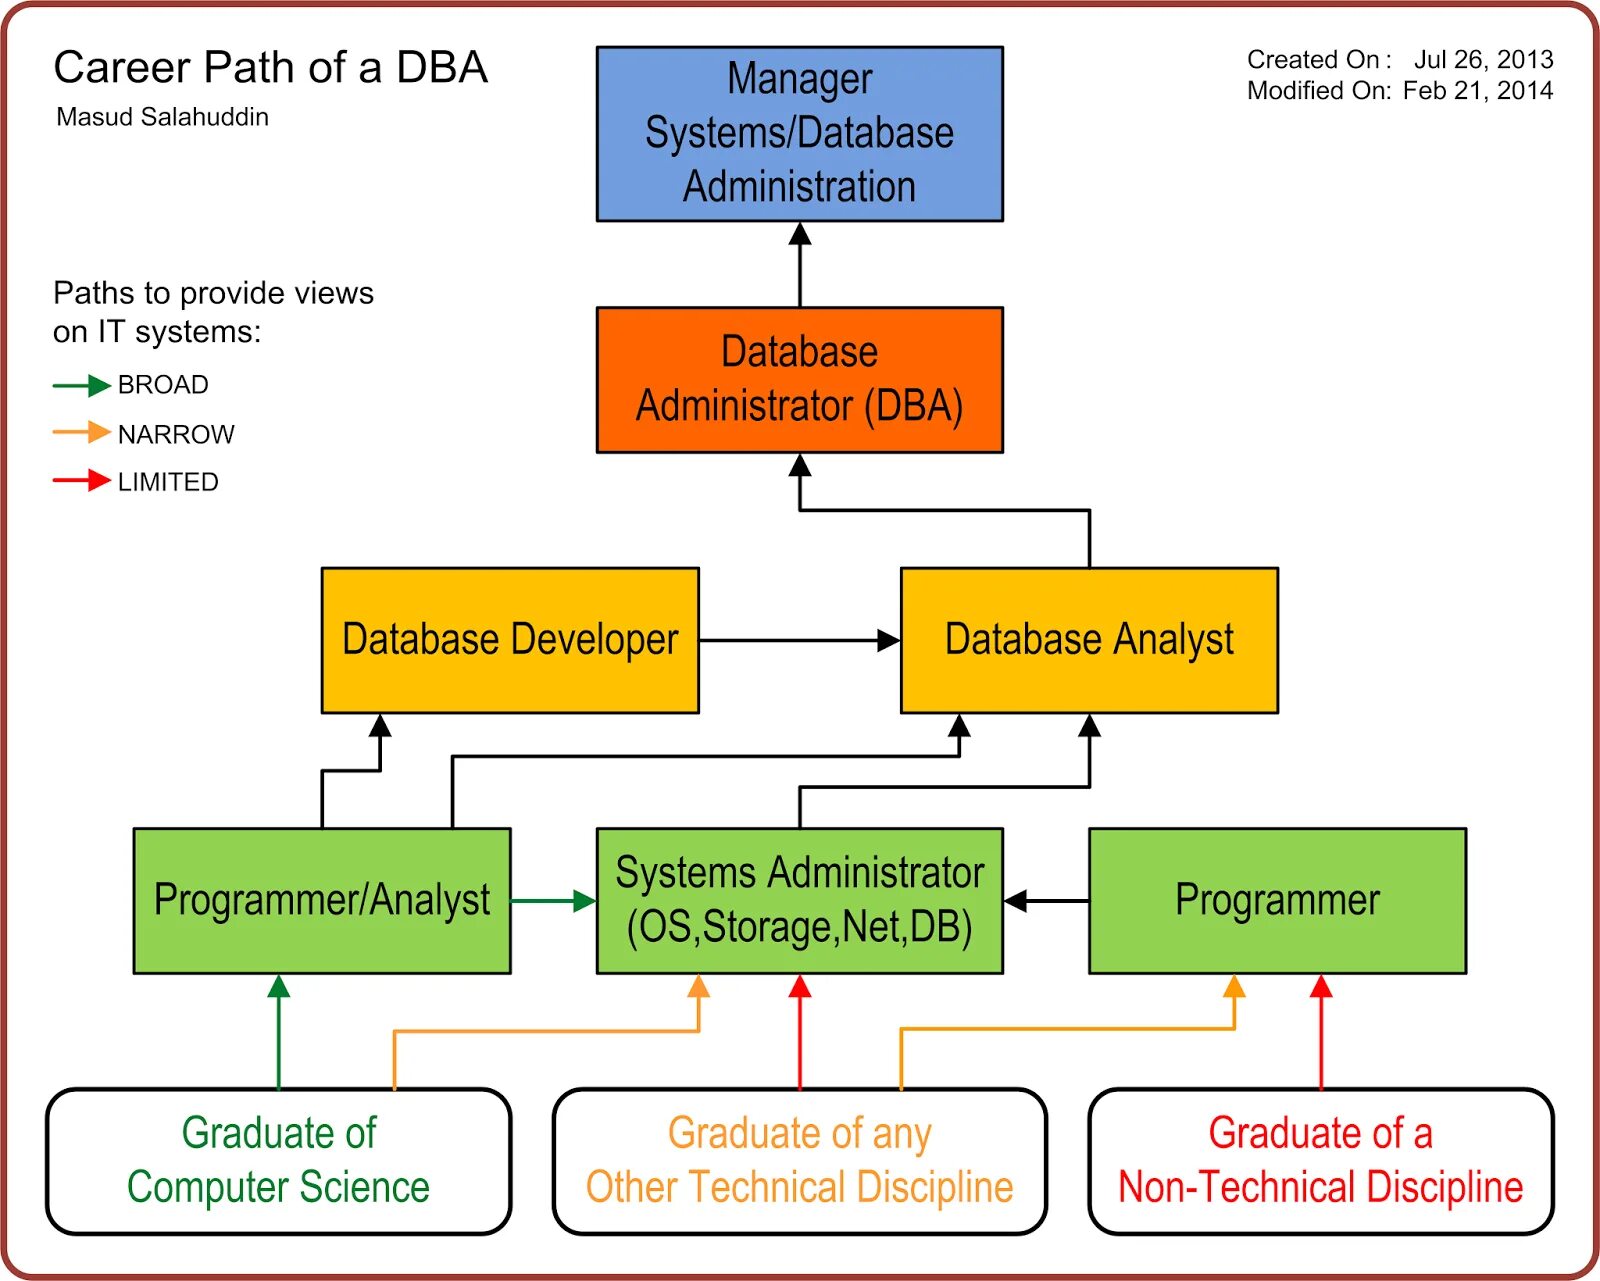 Path manager. Career Path of Management. DBA администратор. Career Paths Computing ответы. Database Administrator.